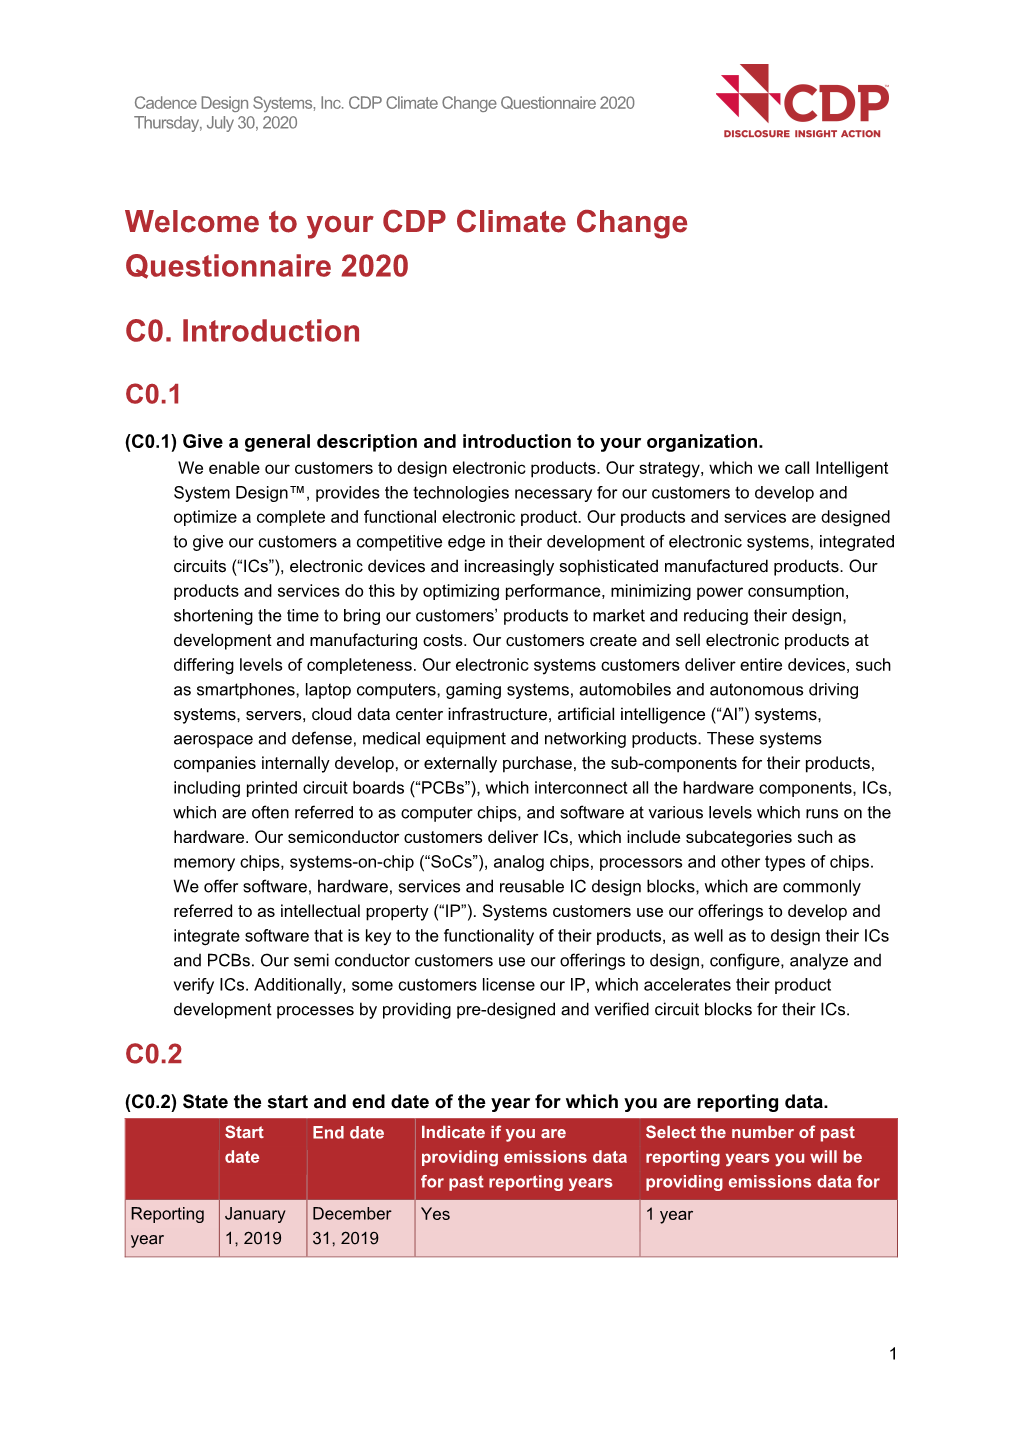 CDNS 2020 CDP Climate Change Report